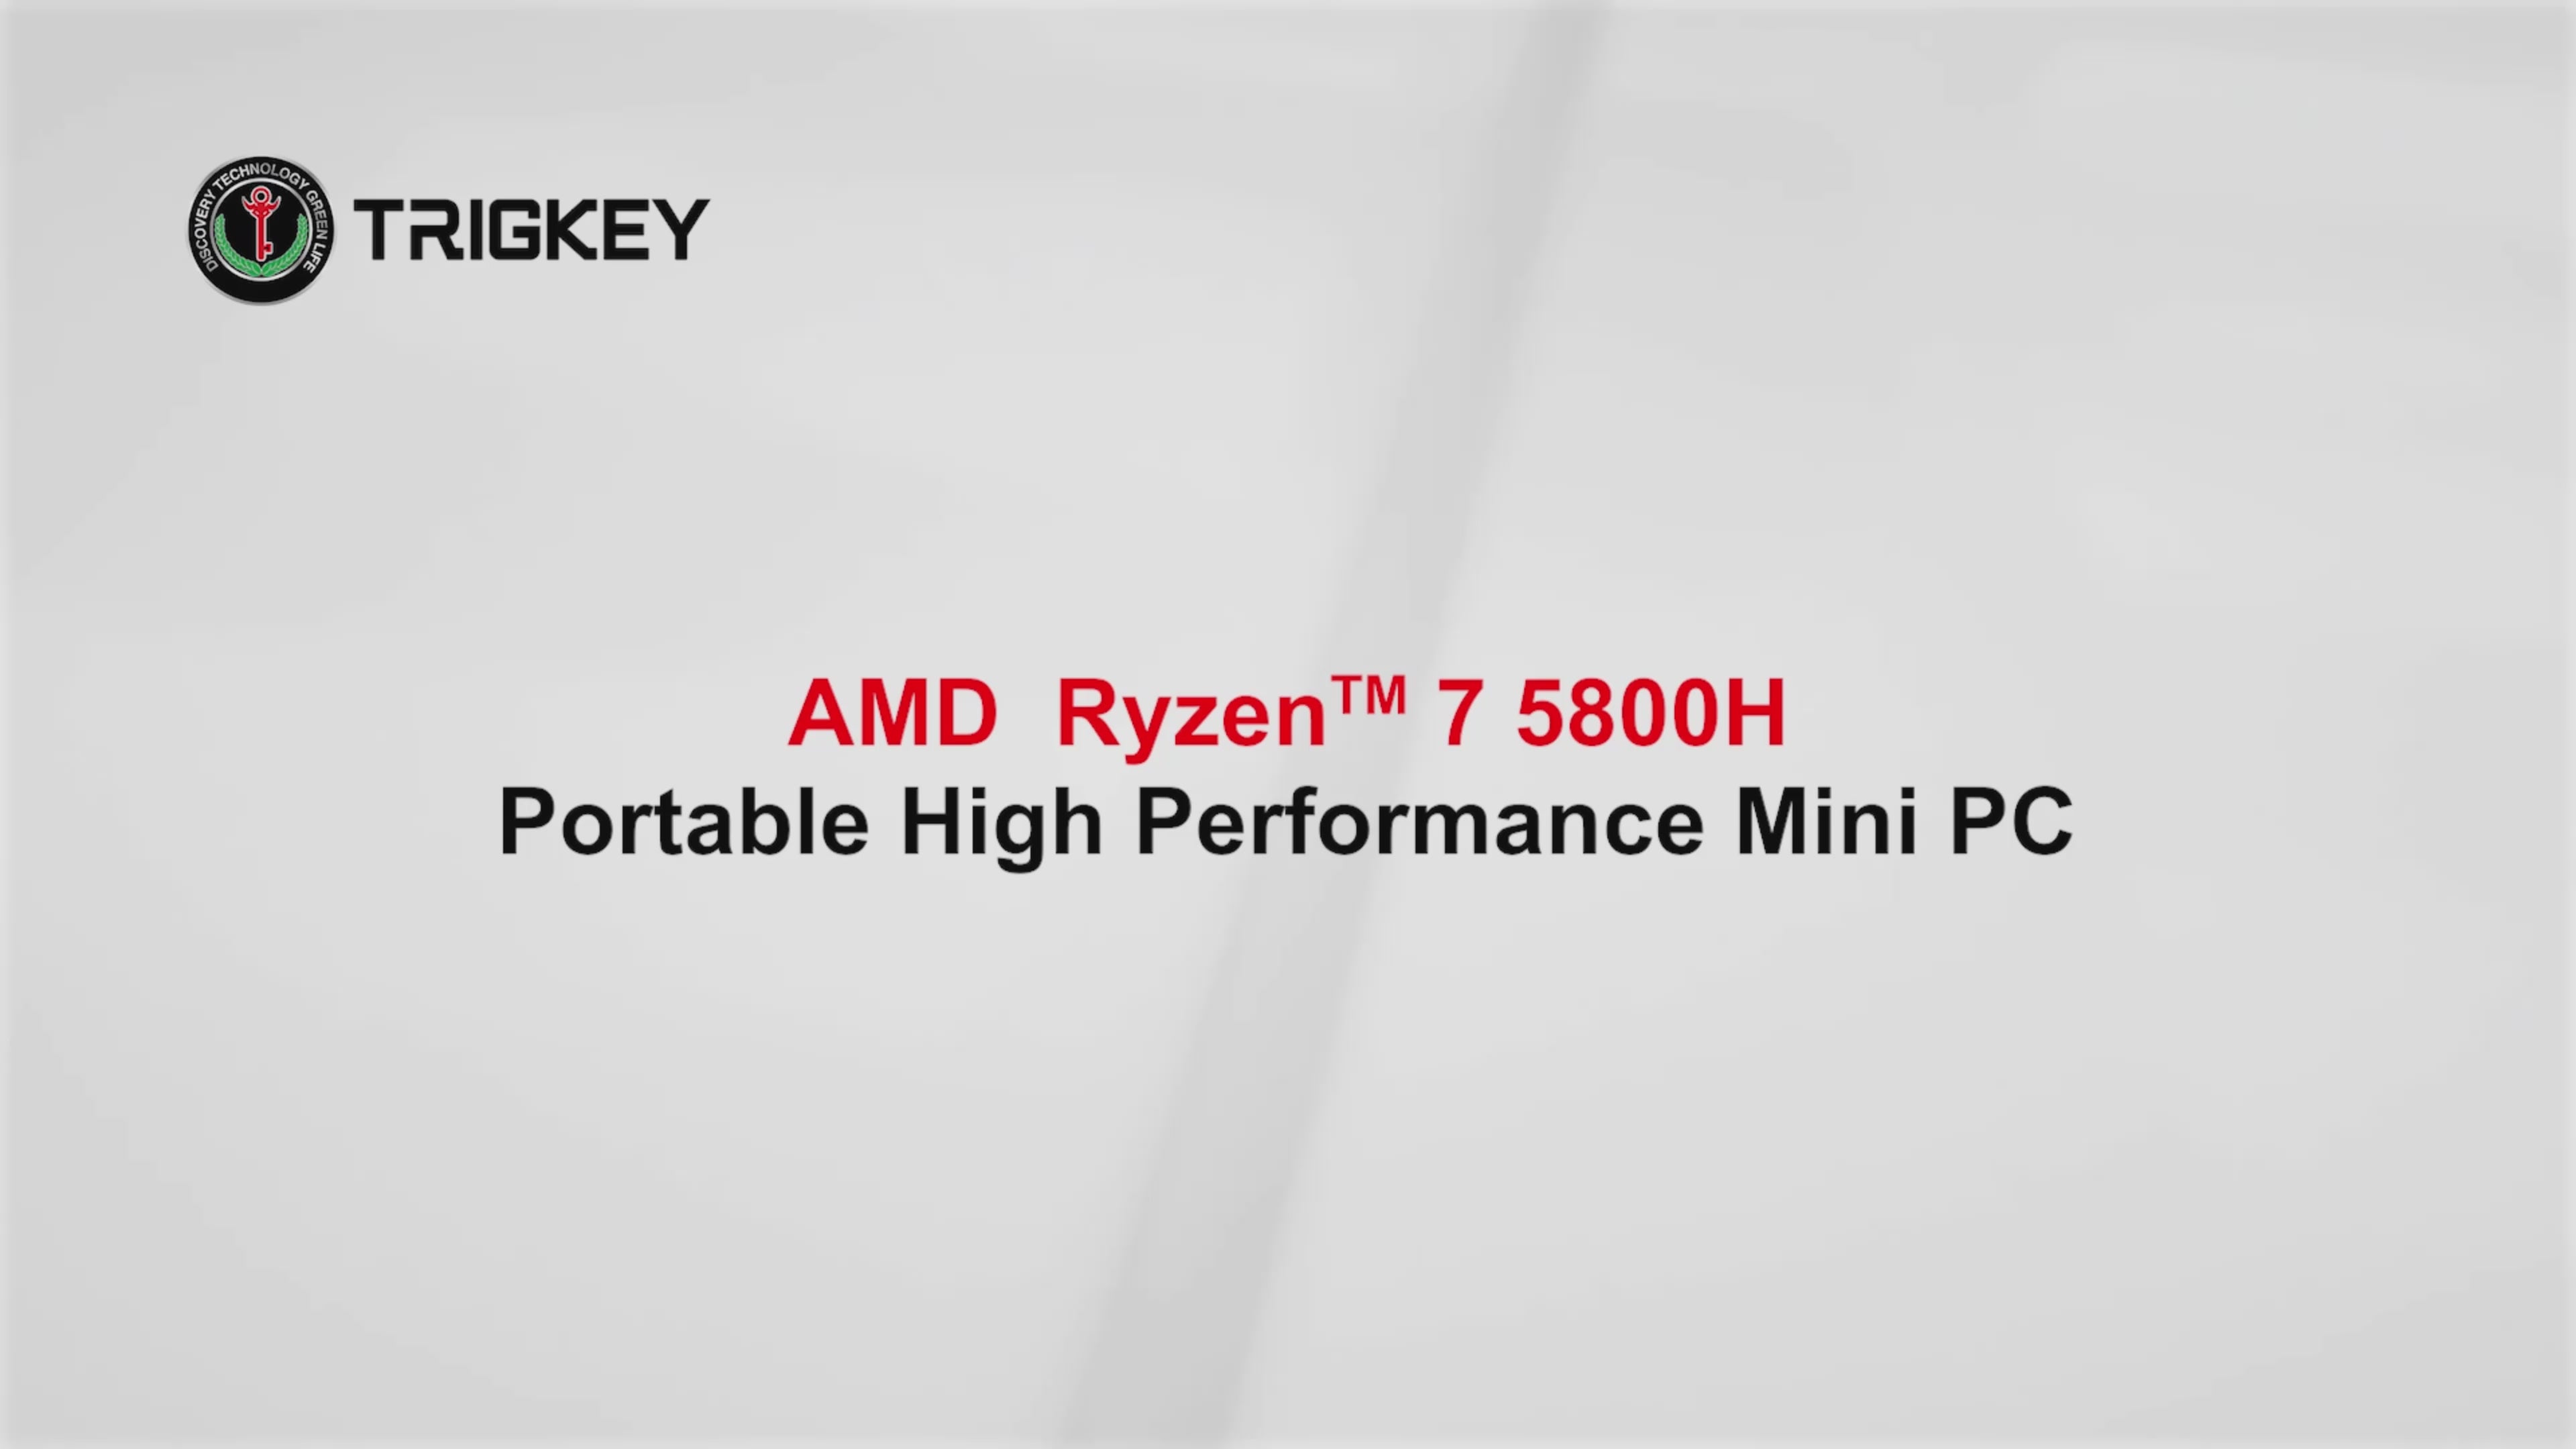  TRIGKEY AMD Ryzen 7 Mini PC 5800H(8 Cores, 16 Threads